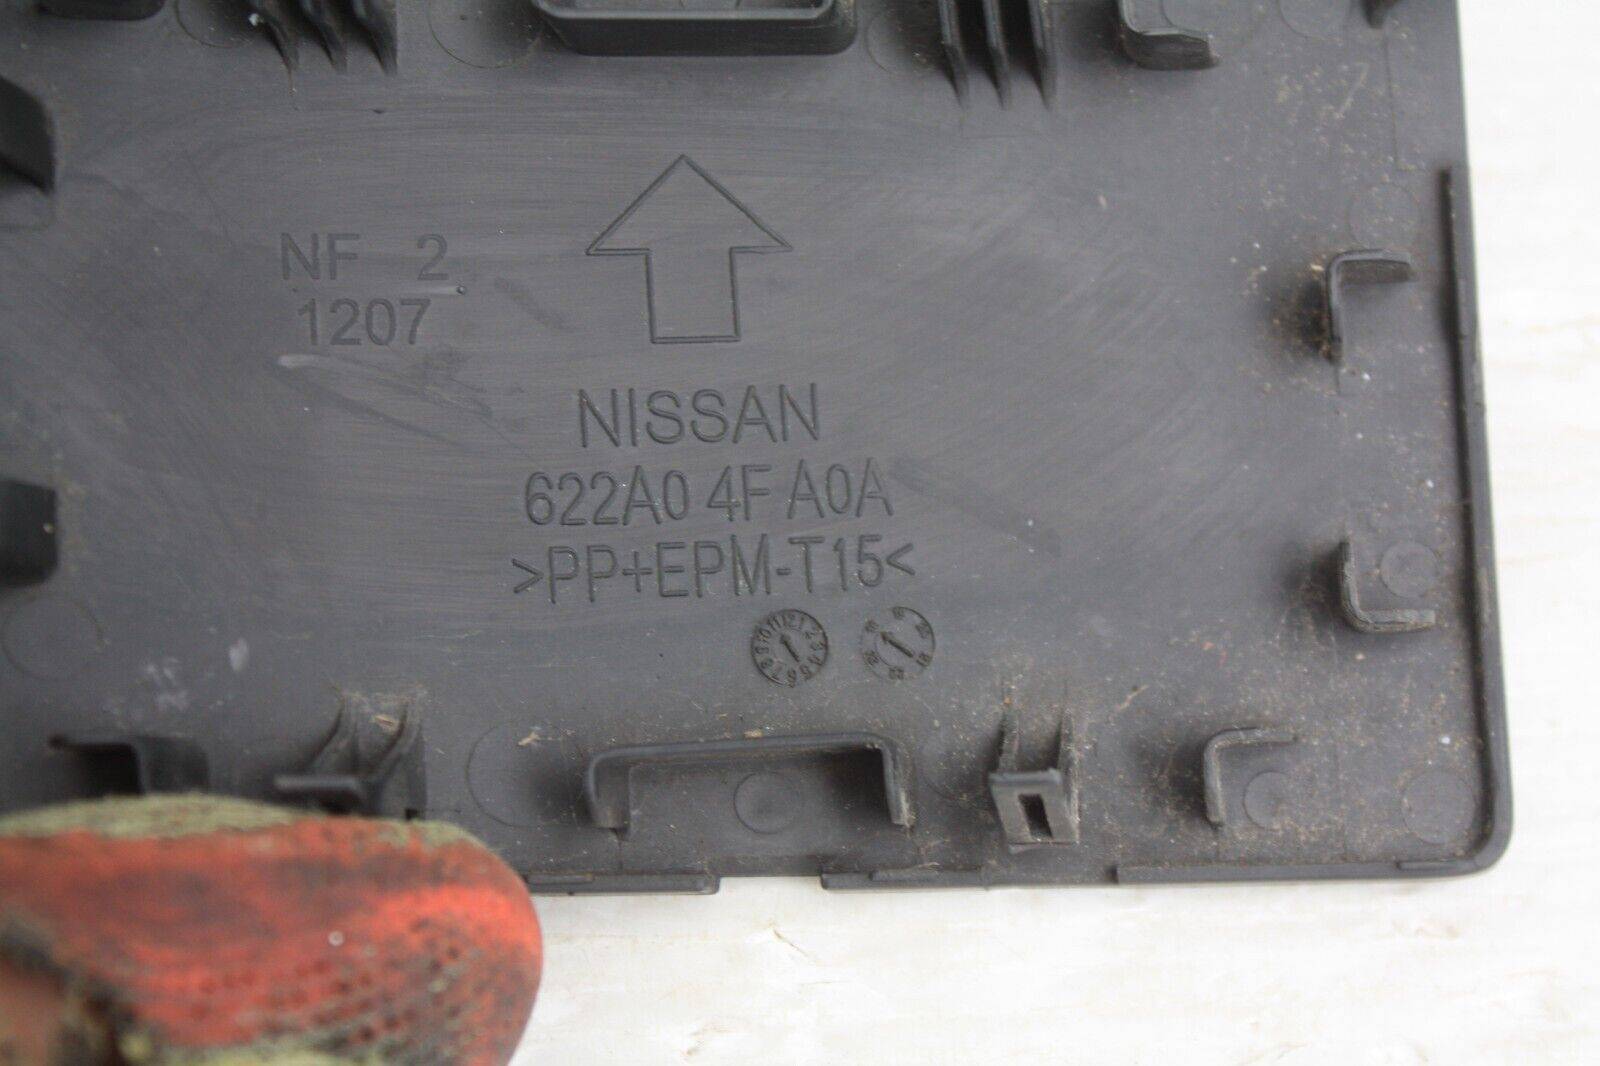 Nissan-Qashqai-Front-Bumper-Tow-Cover-622A0-4FA0A-Genuine-175846555395-4